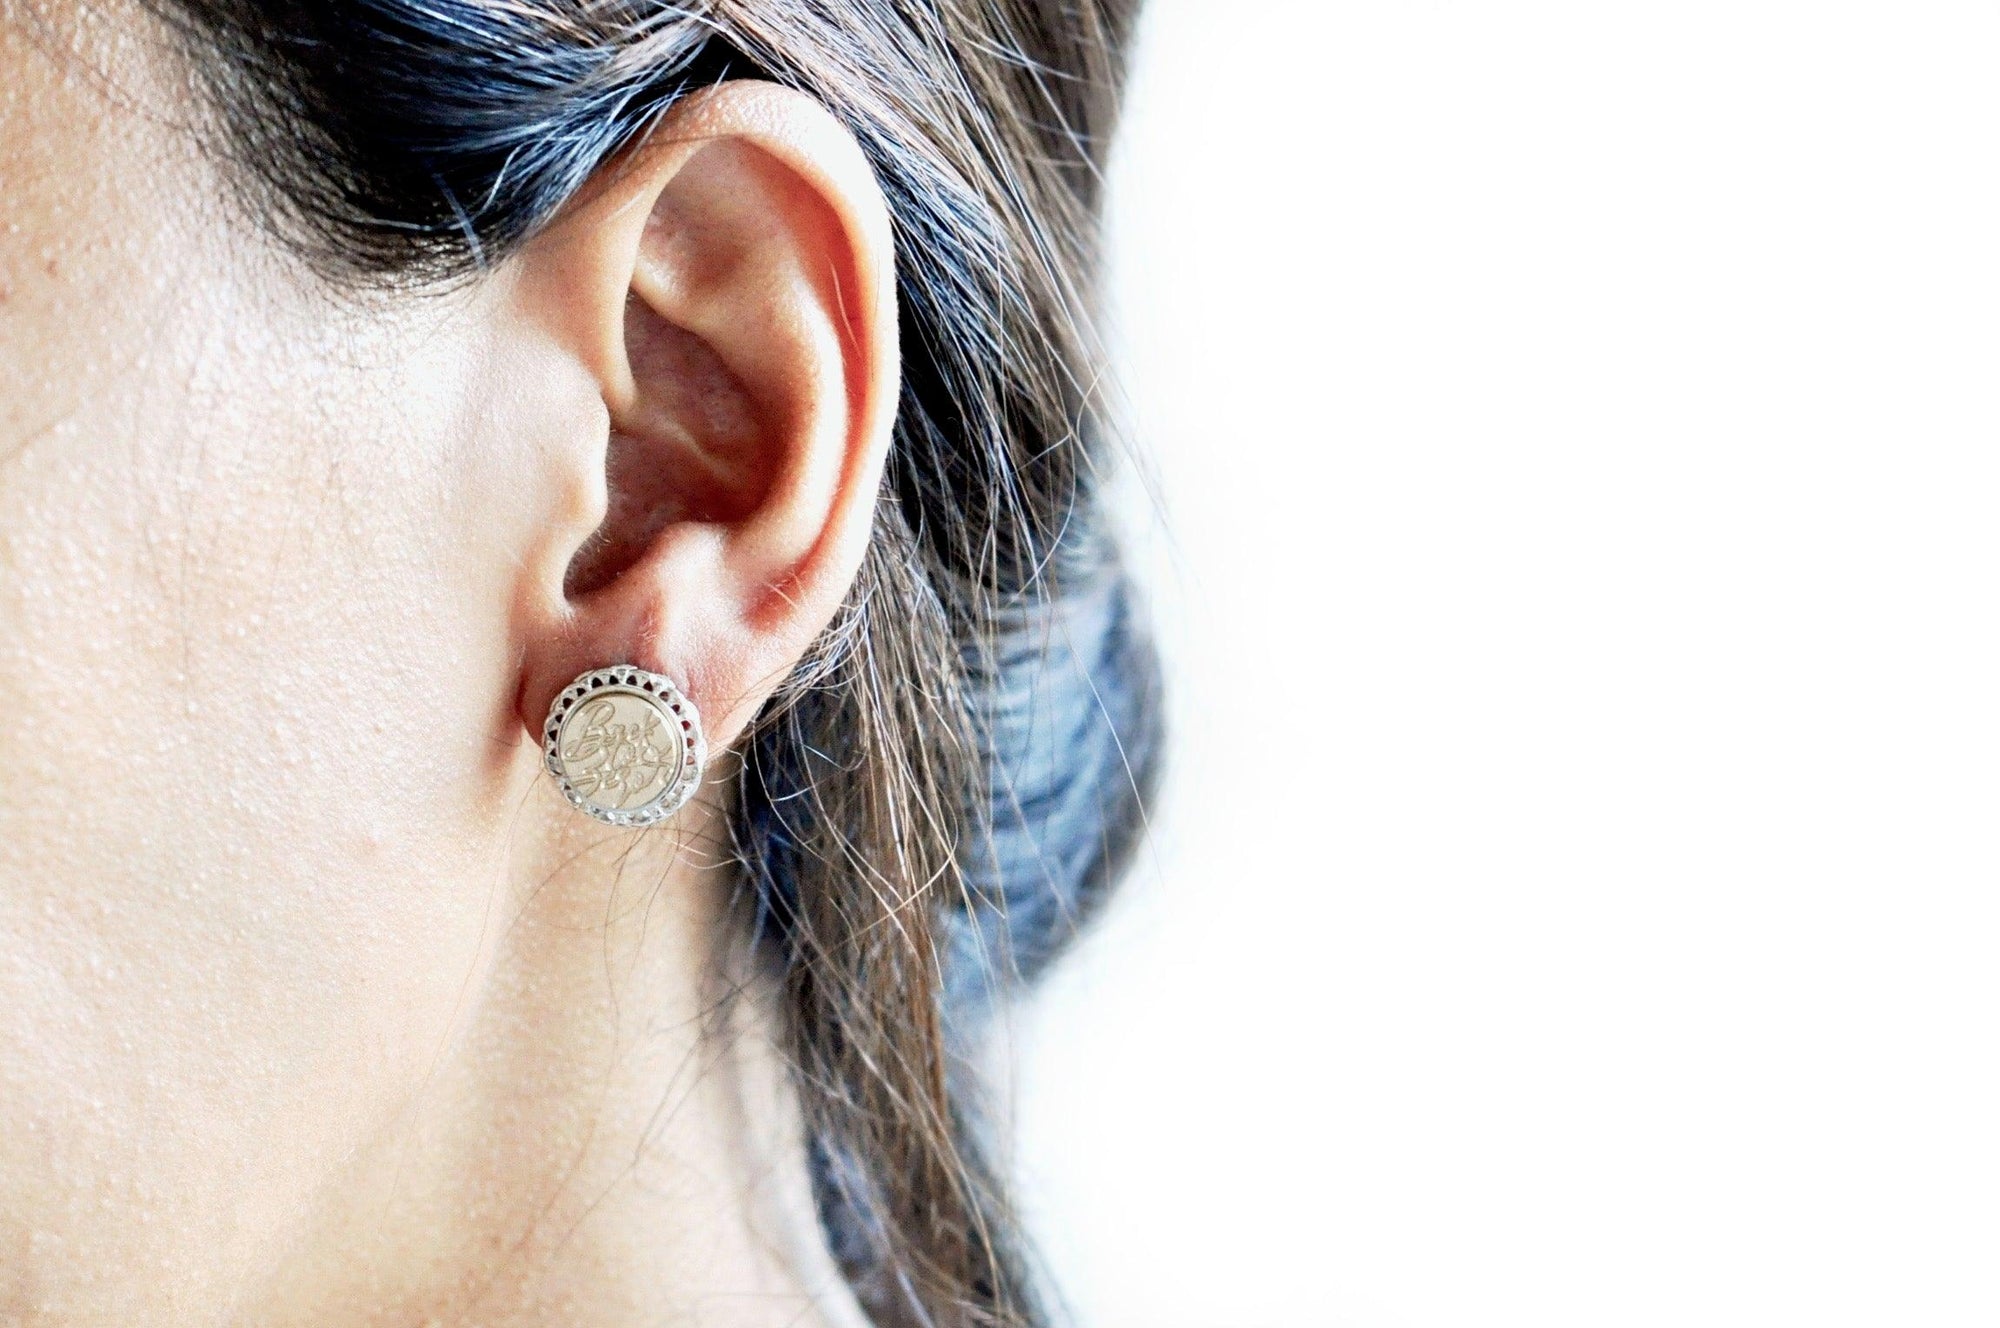 Design your own Lace Signet Earrings - Backtozero B20 - accessory, bespoke, Custom, custom earrings, customsignet, Design Your Own, earrings, her, jewelry, lace, lace earrings, laceearrings, signet